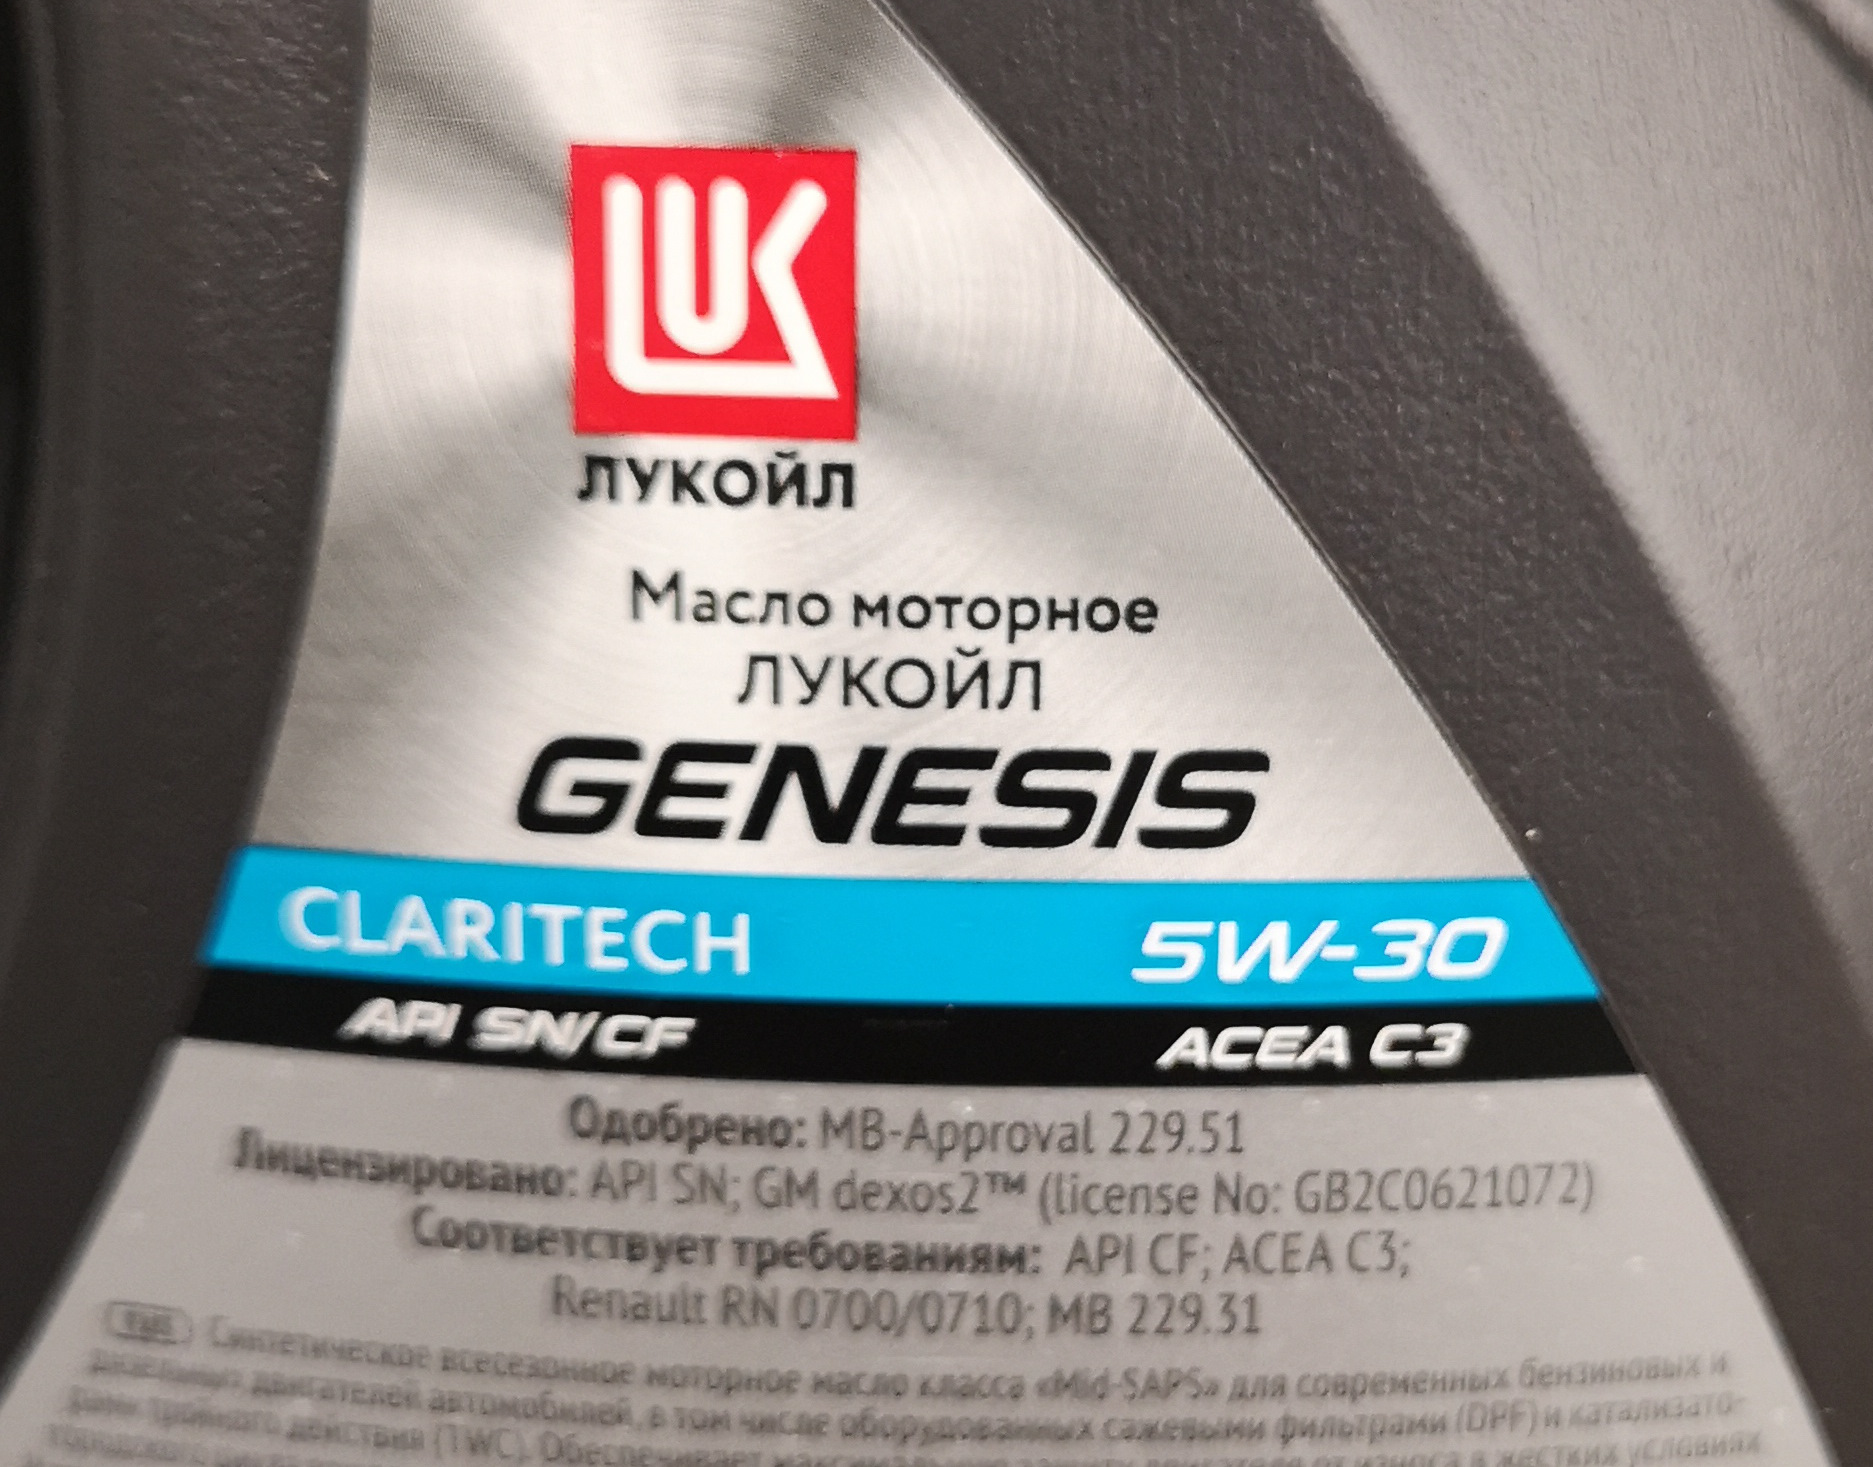 Тест масла лукойл генезис. Lukoil Genesis Claritech 5w-30 dexos2. Масло Лукойл Генезис Dexos 2. Лукойл Генезис dexos2 допуск. Стойка Лукойл Генезис.